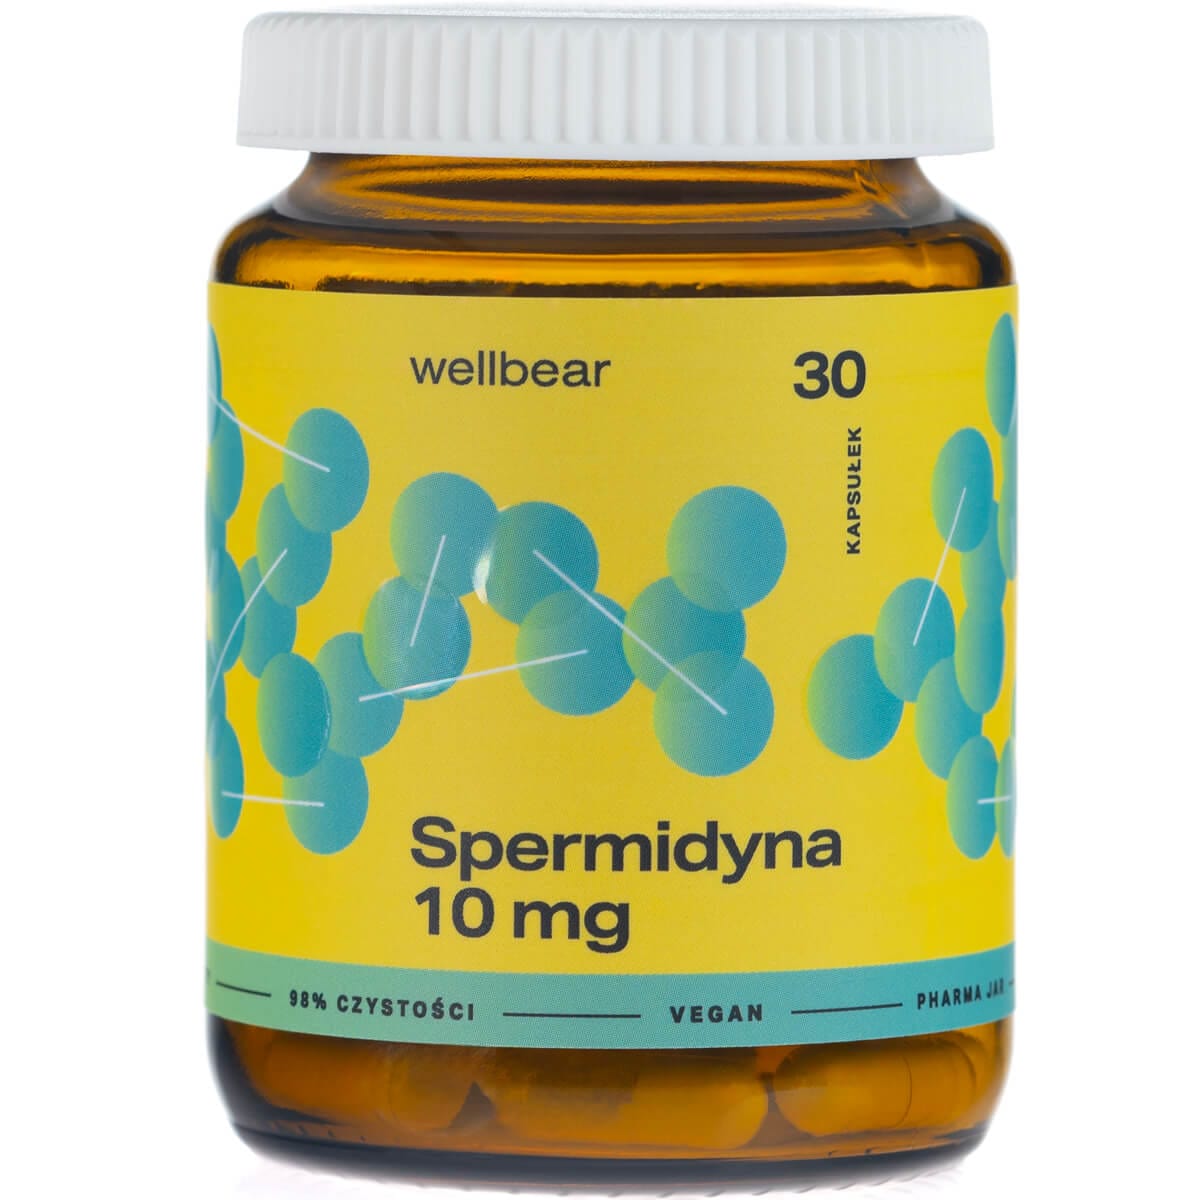 Wellbear Spermidine 10 mg - 30 Capsules